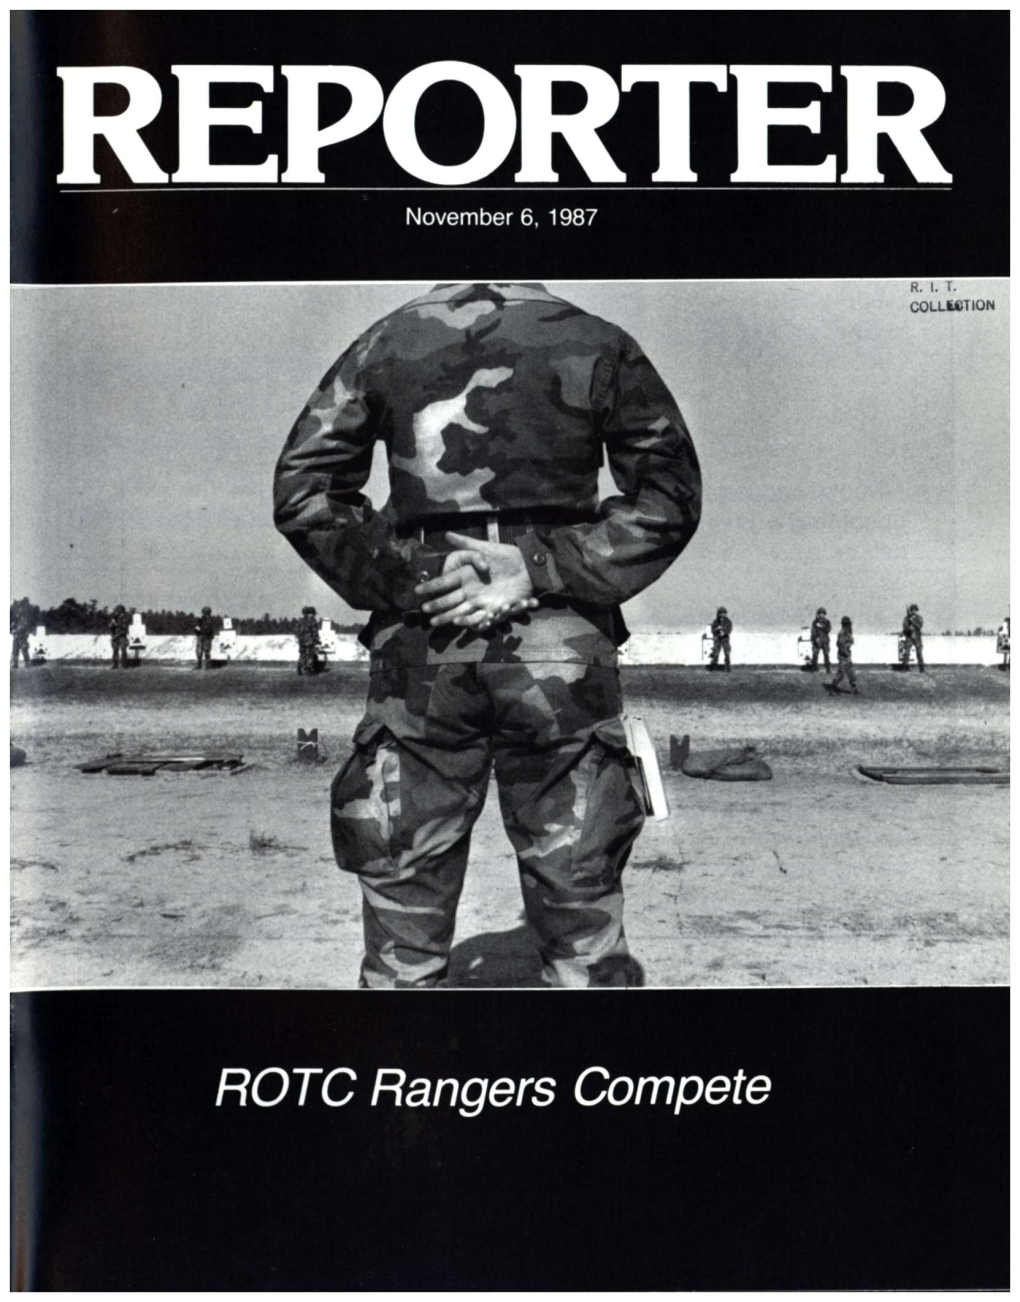 ROTC Rangers Compete